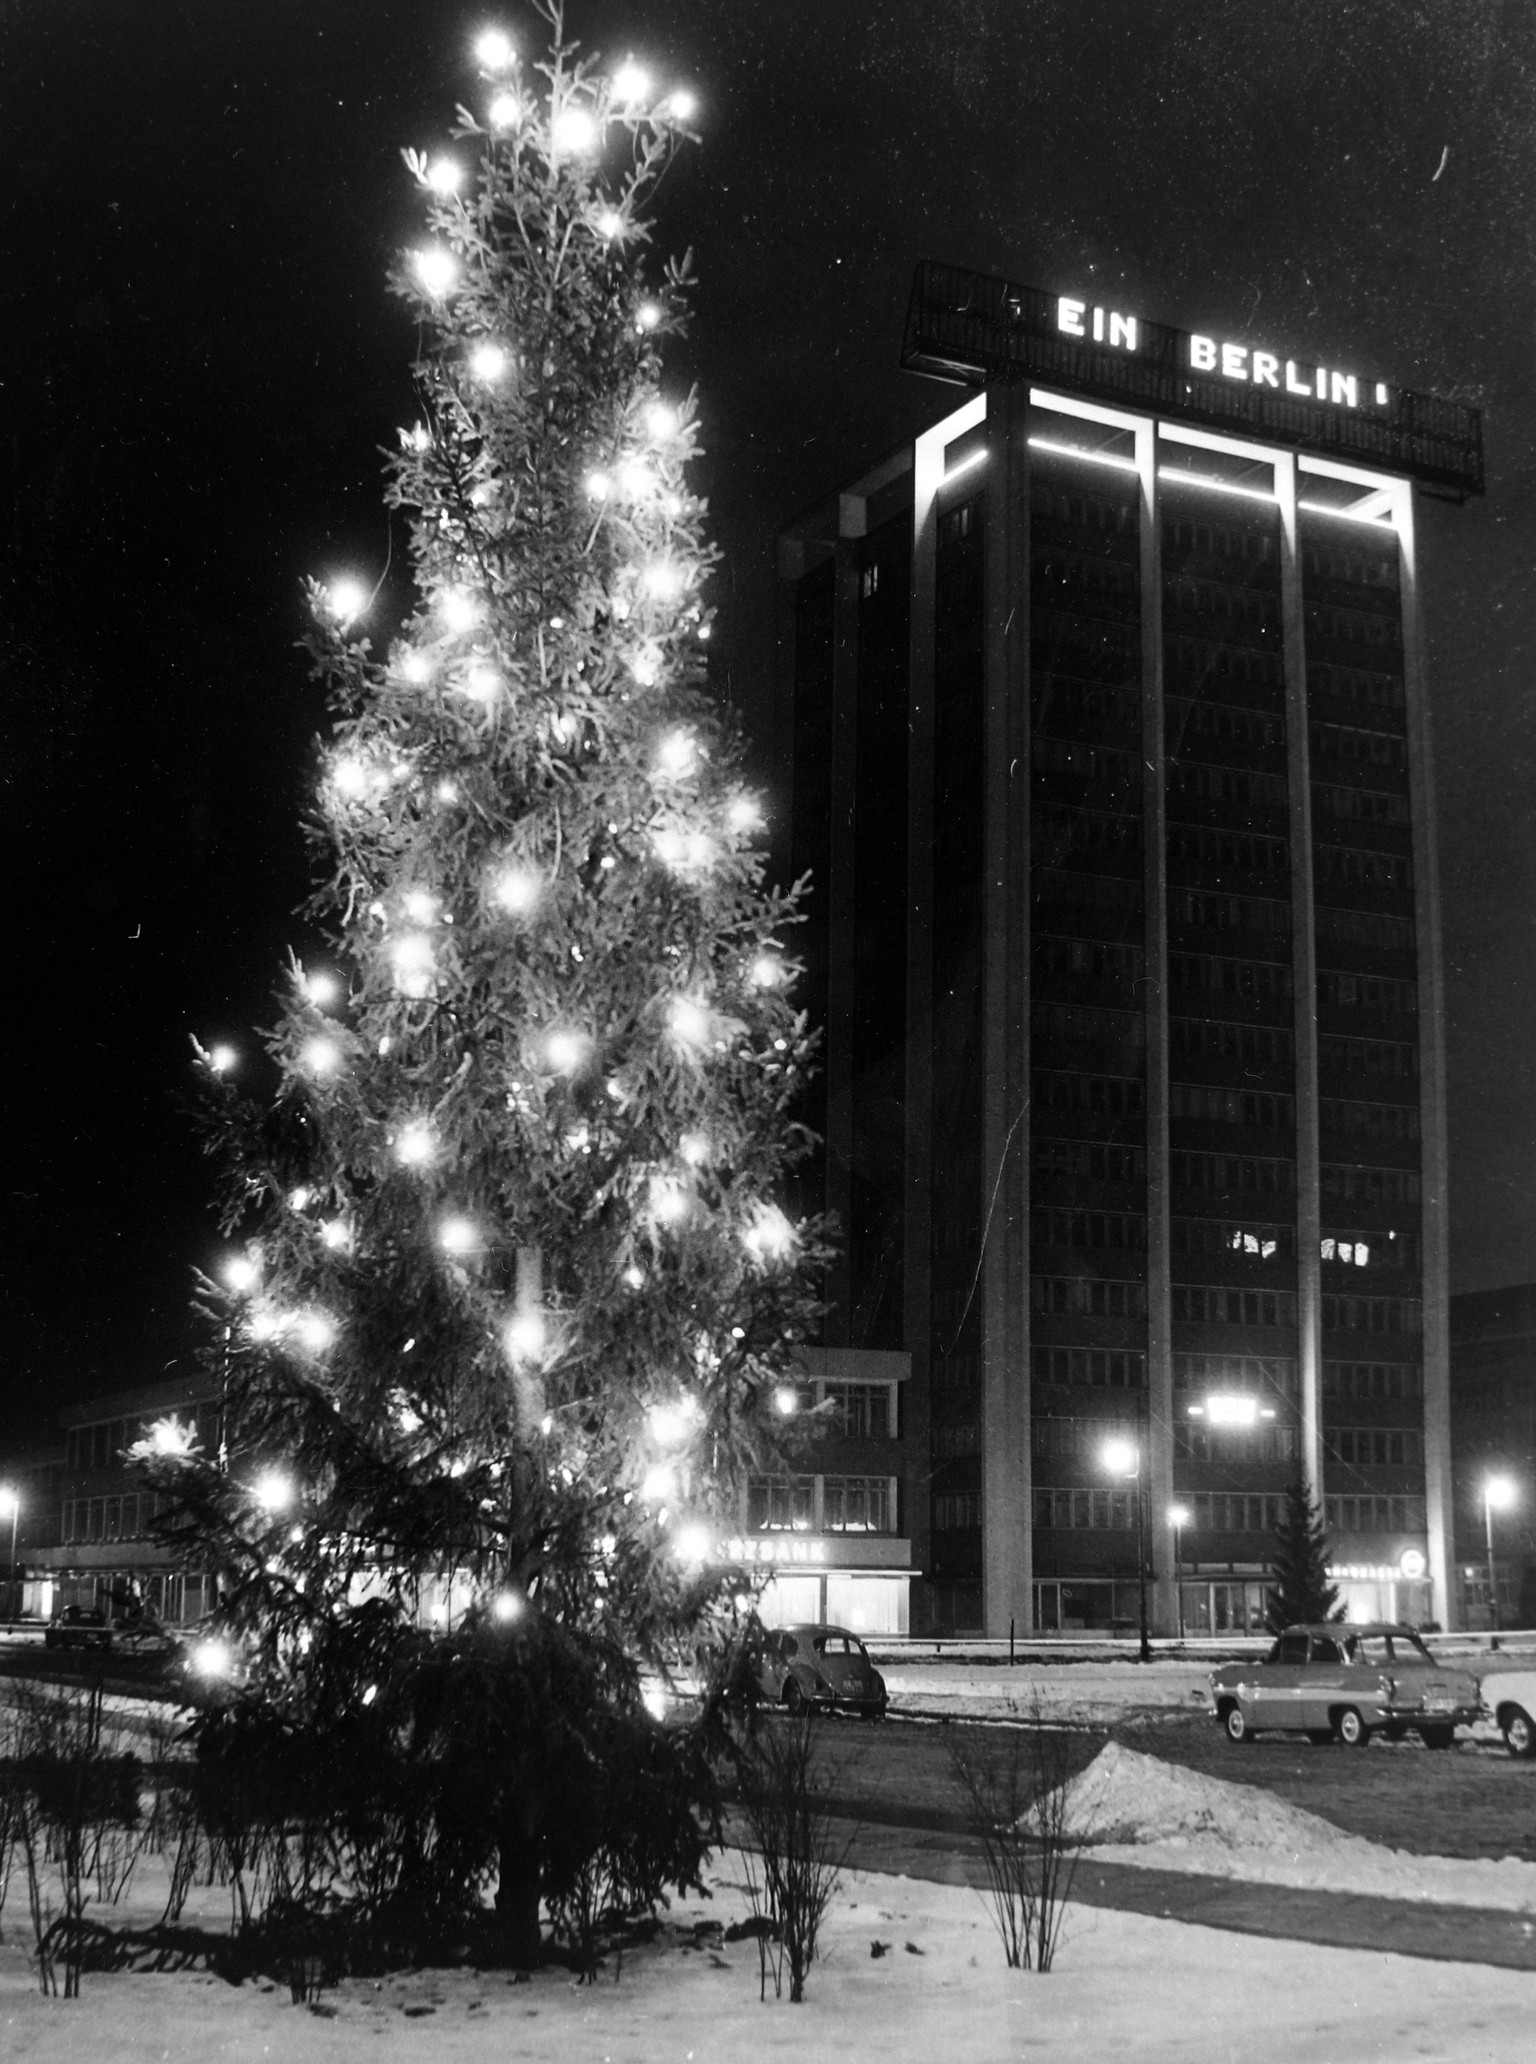 BORDER NEON MESSAGE SAYING ONE BERLIN WITH CHRISTMAS TREE ; 23 DECEMBER 1963, Copyright: Topfoto PUBLICATIONxINxGERxSUIxAUTxONLY UnitedArchivesIPU468870